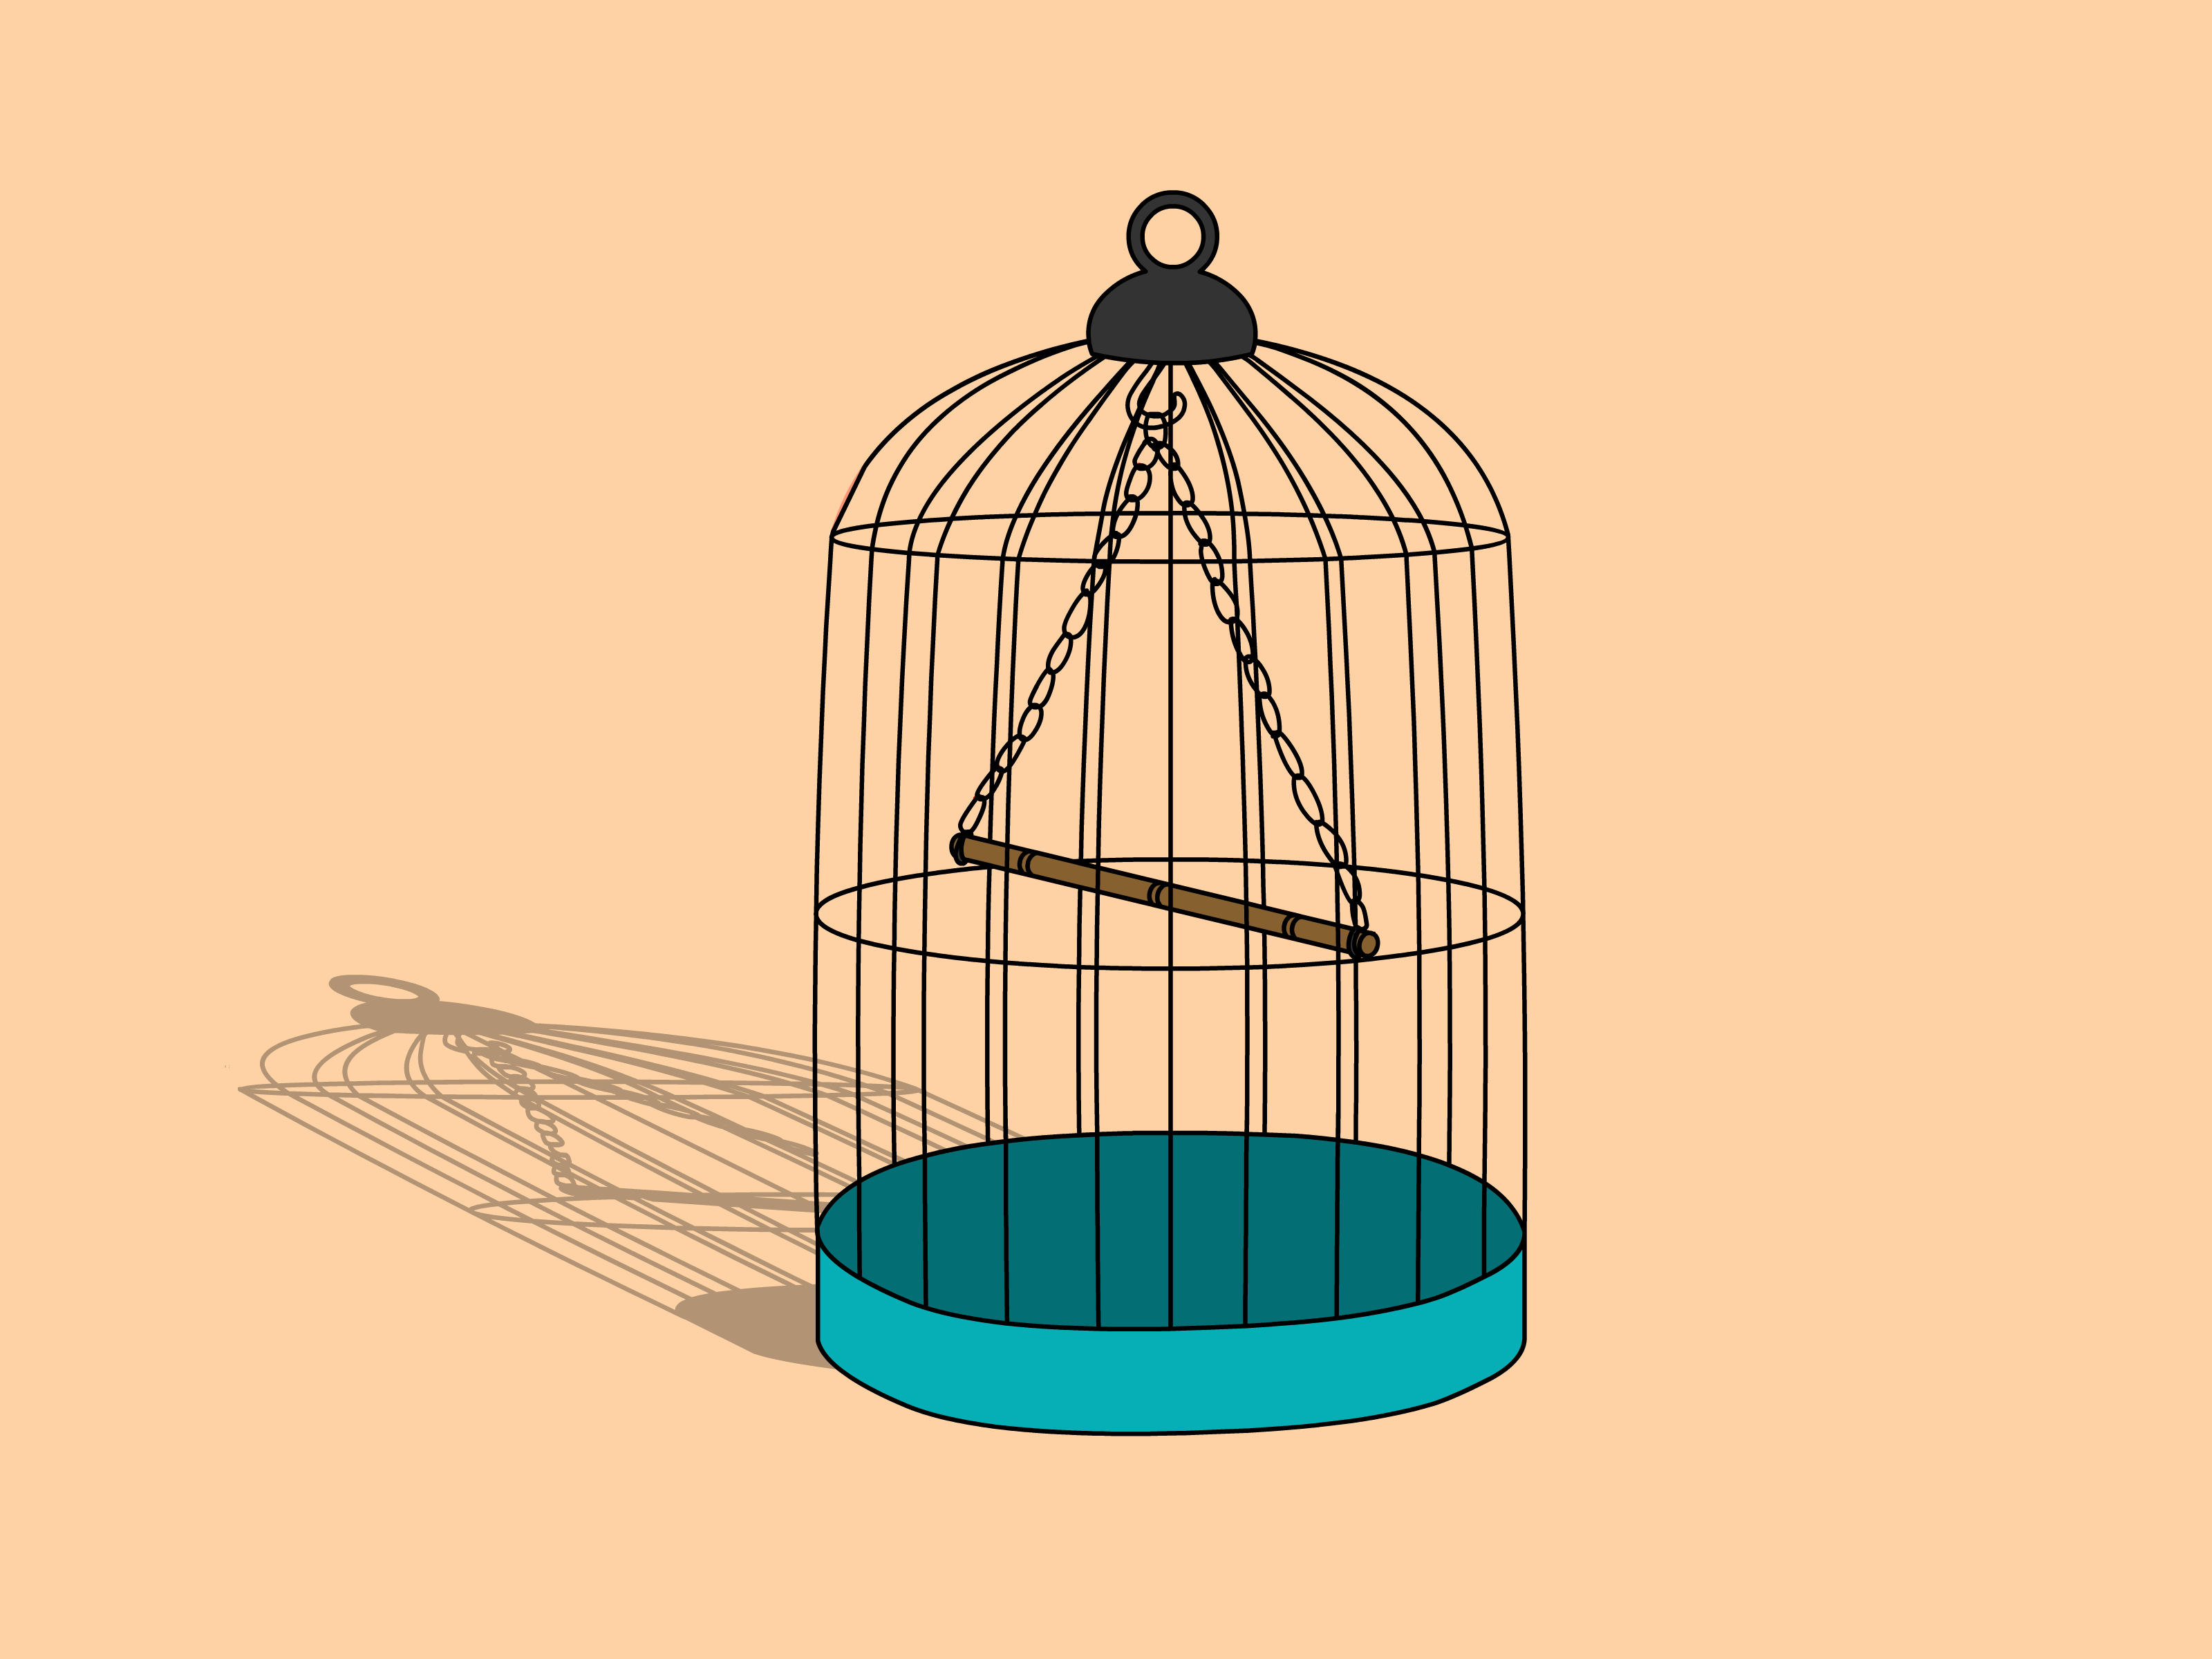 Bird Cage Drawing - Draw Tweety Birds Cage (3200x2400)